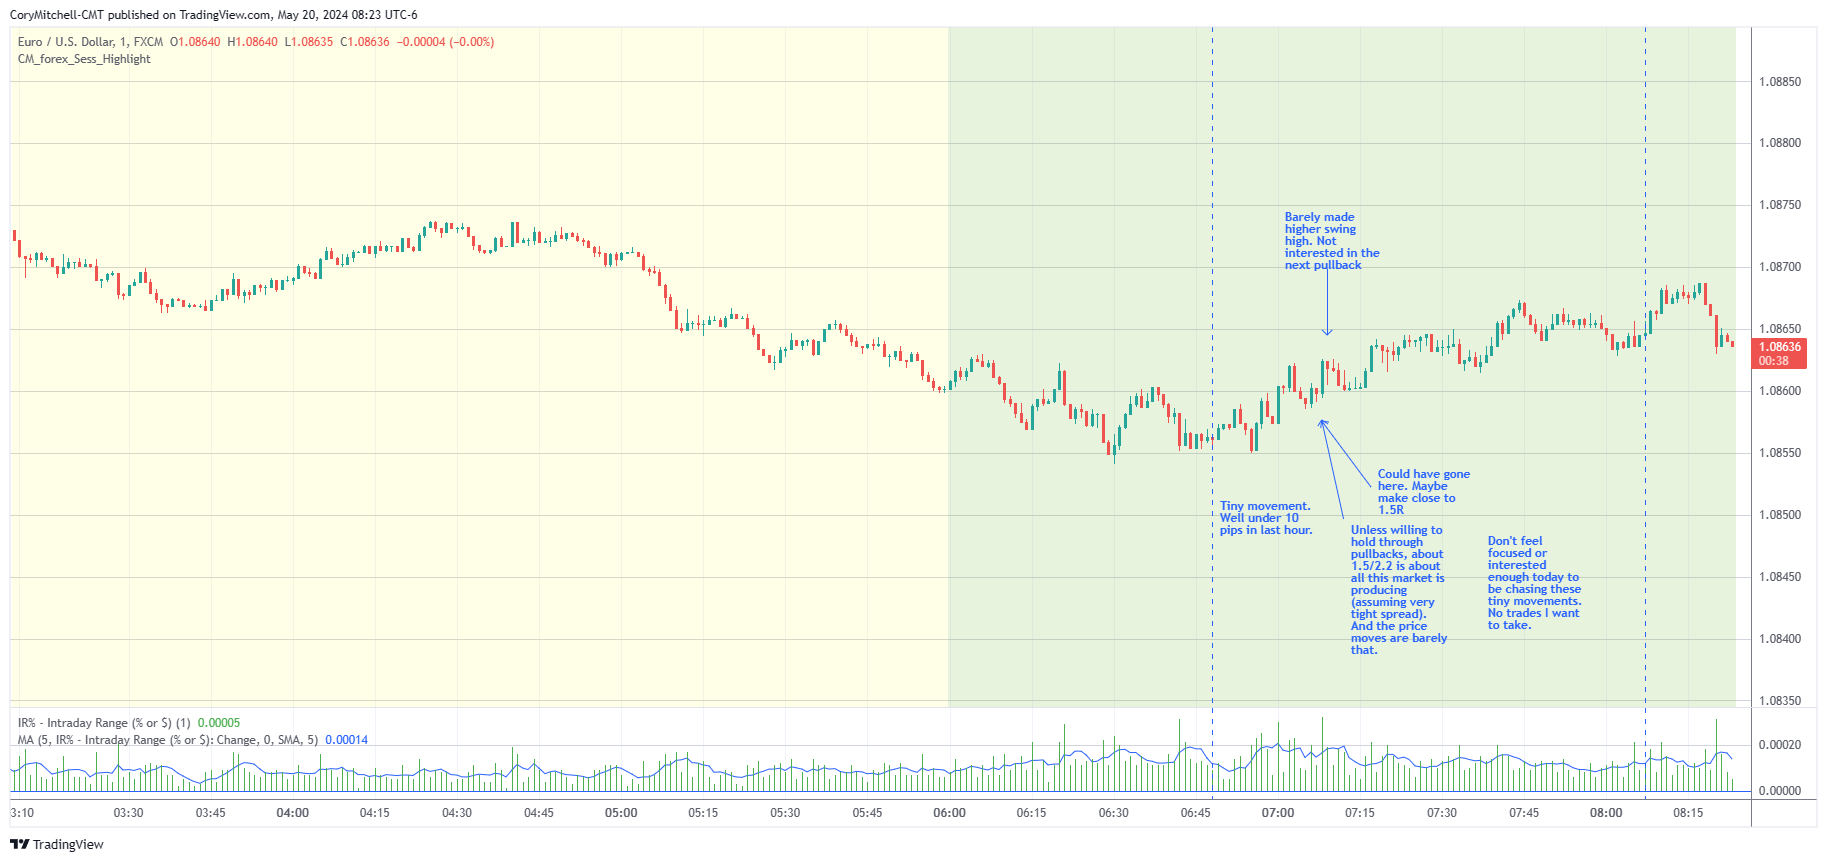 EURUSD 1 minute chart day trading examples May 20 2024